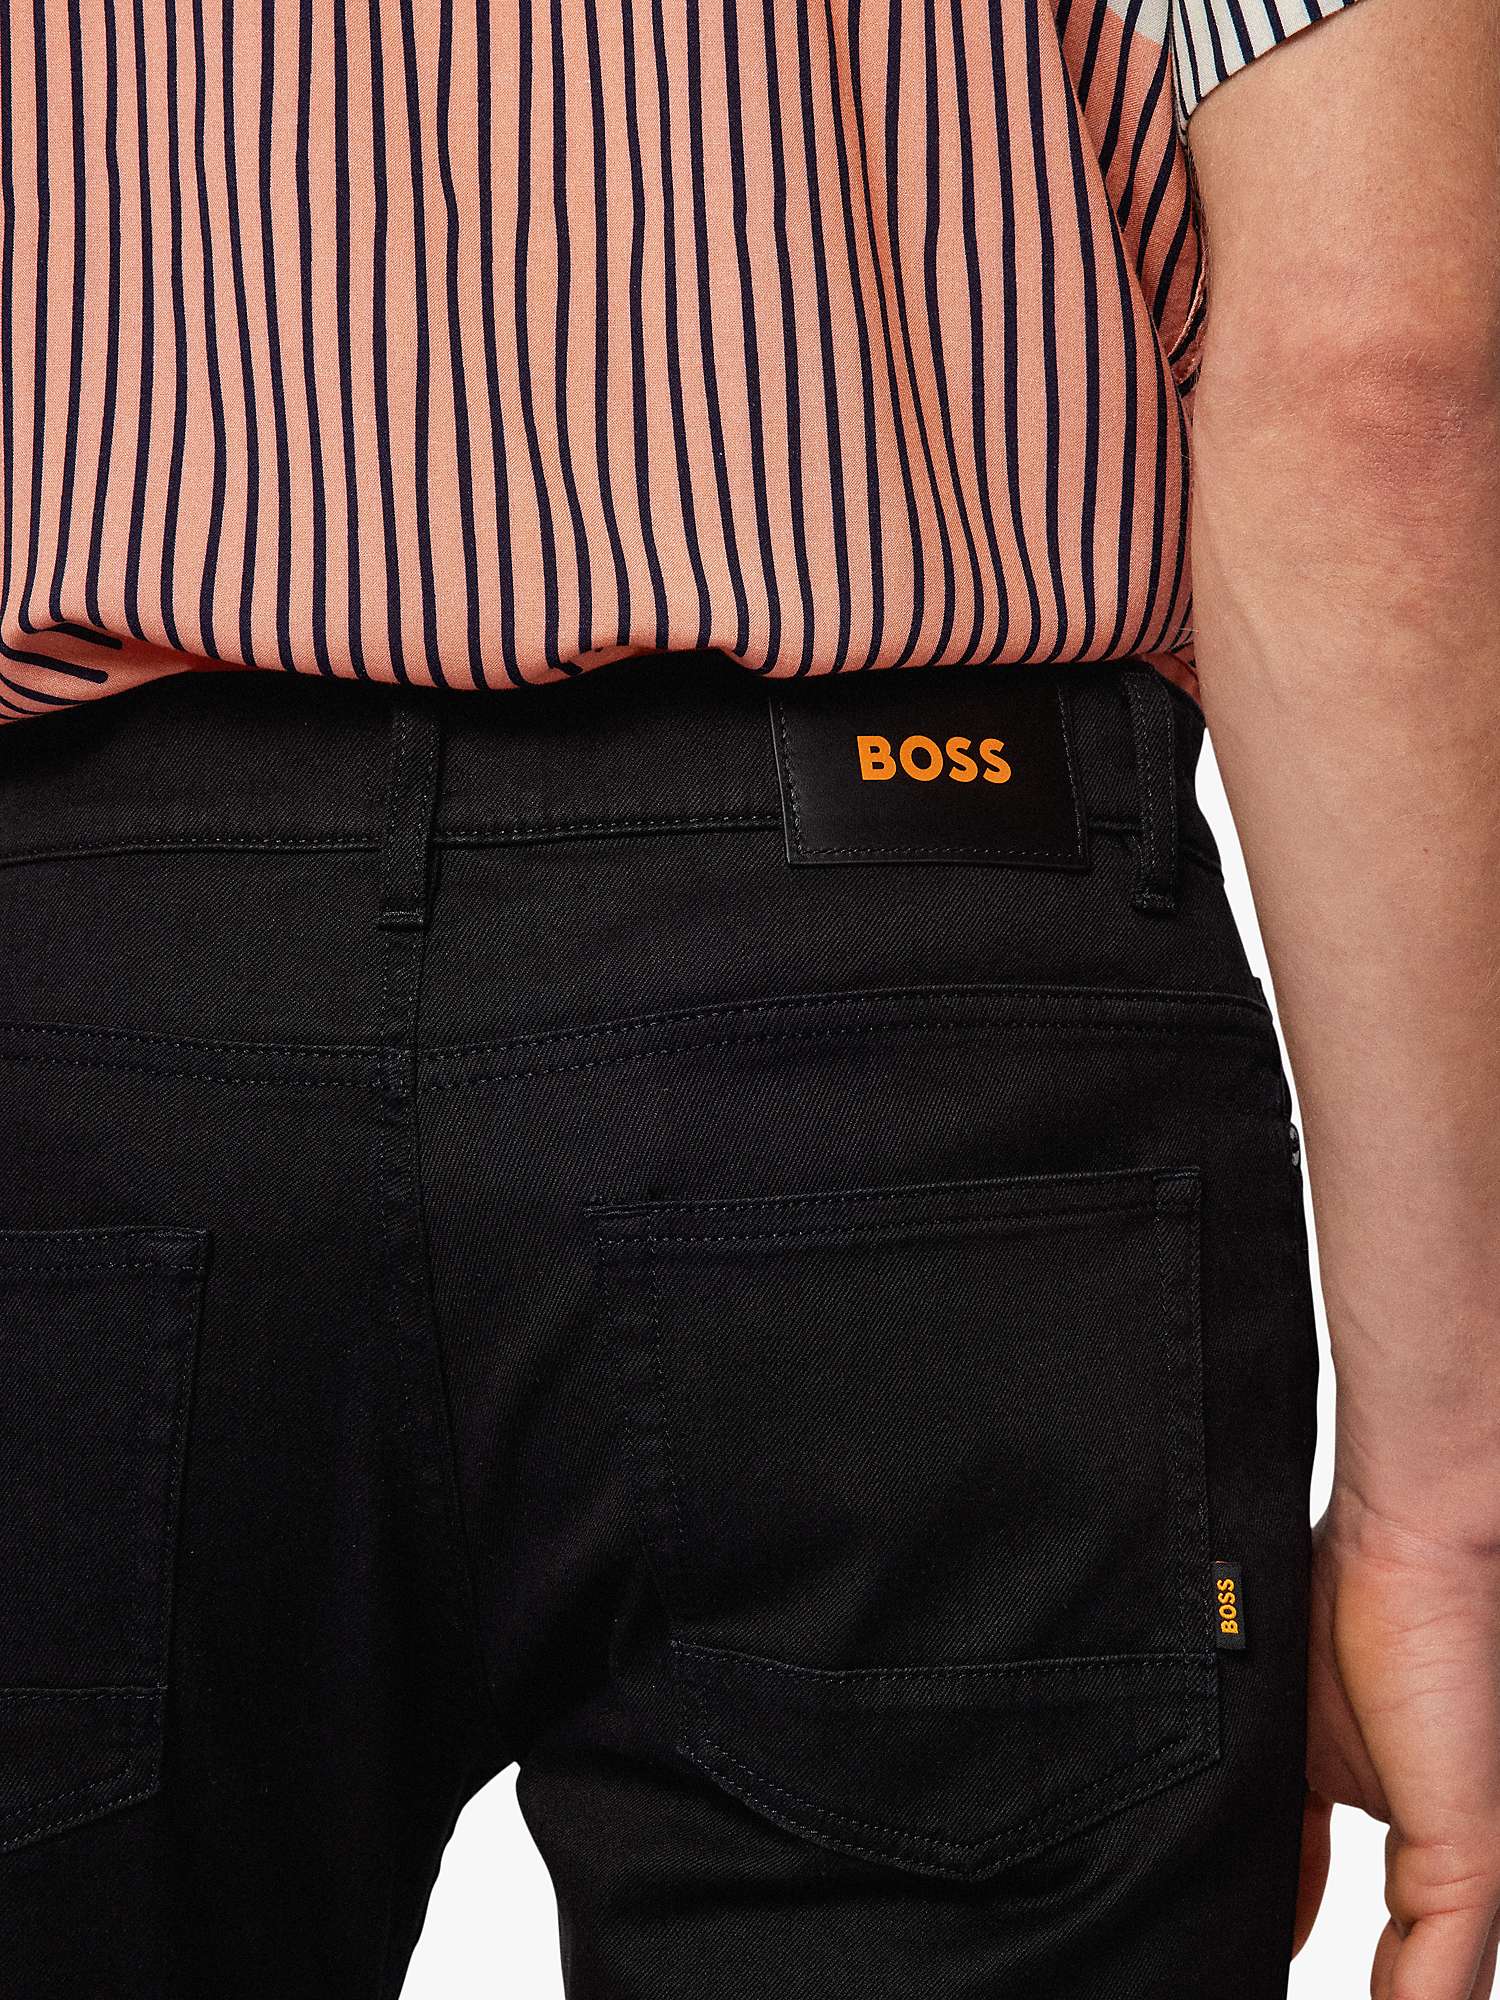 Buy BOSS Delaware Slim Fit Jeans, Black Online at johnlewis.com